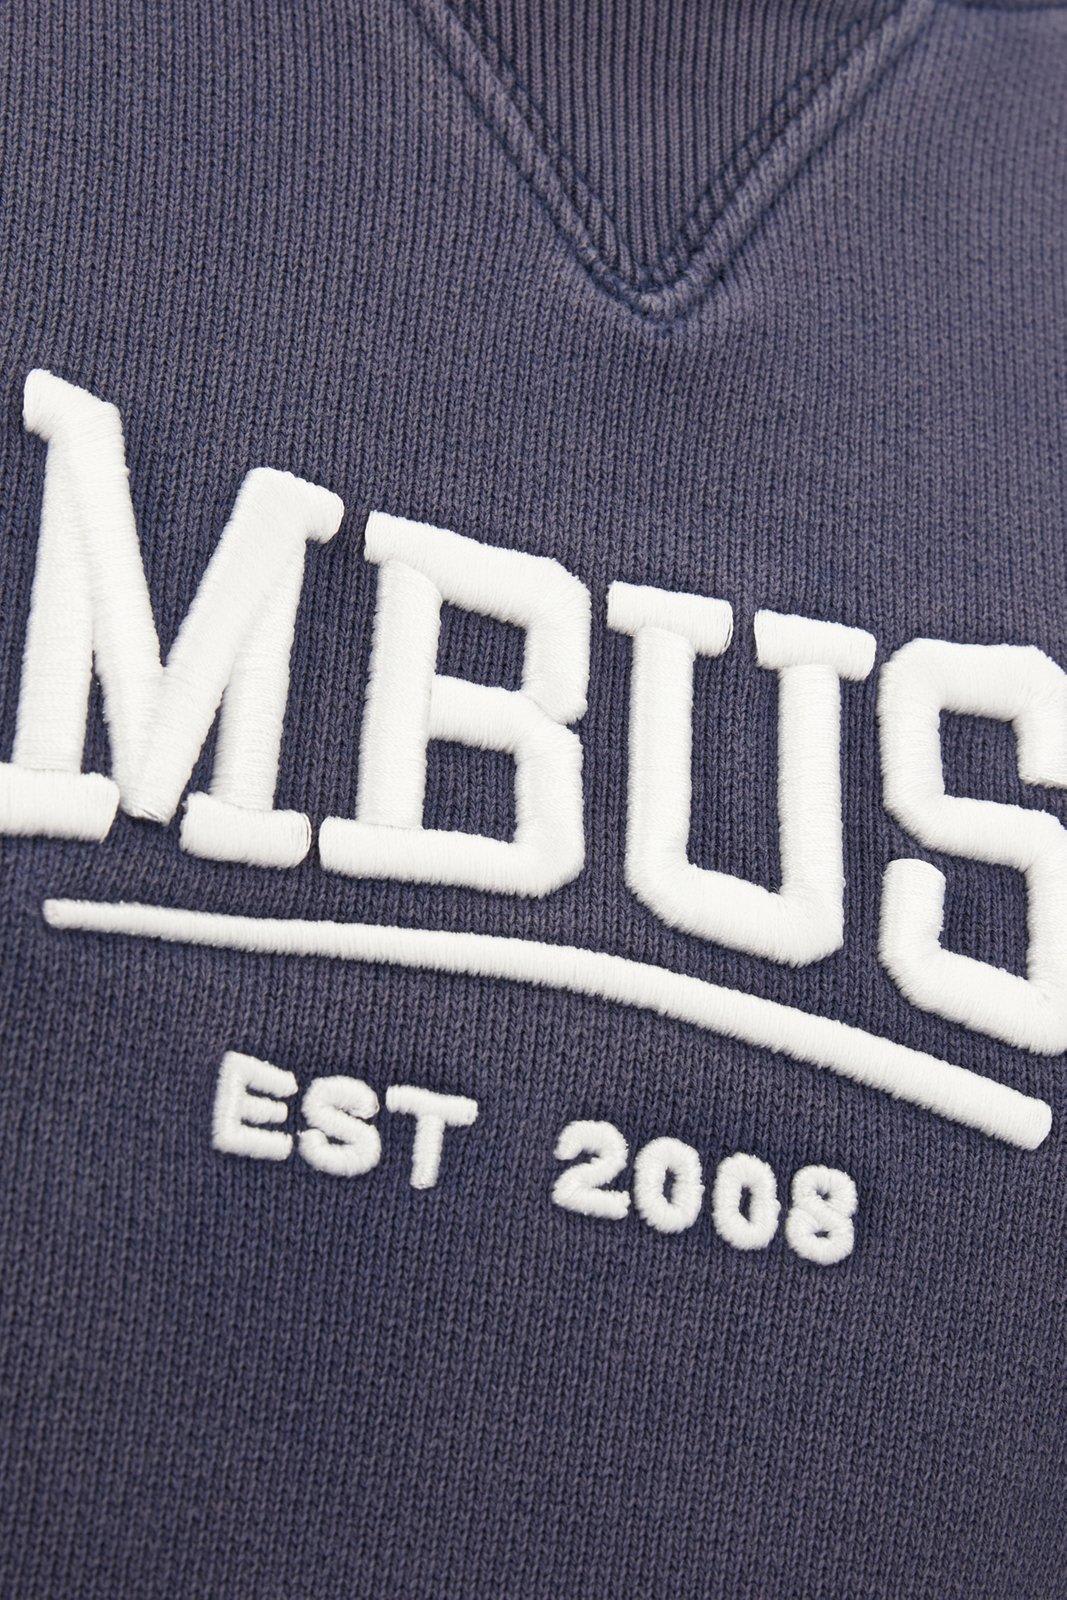 Shop Ambush Logo Embroidered Crewneck Sweatshirt In Insignia B